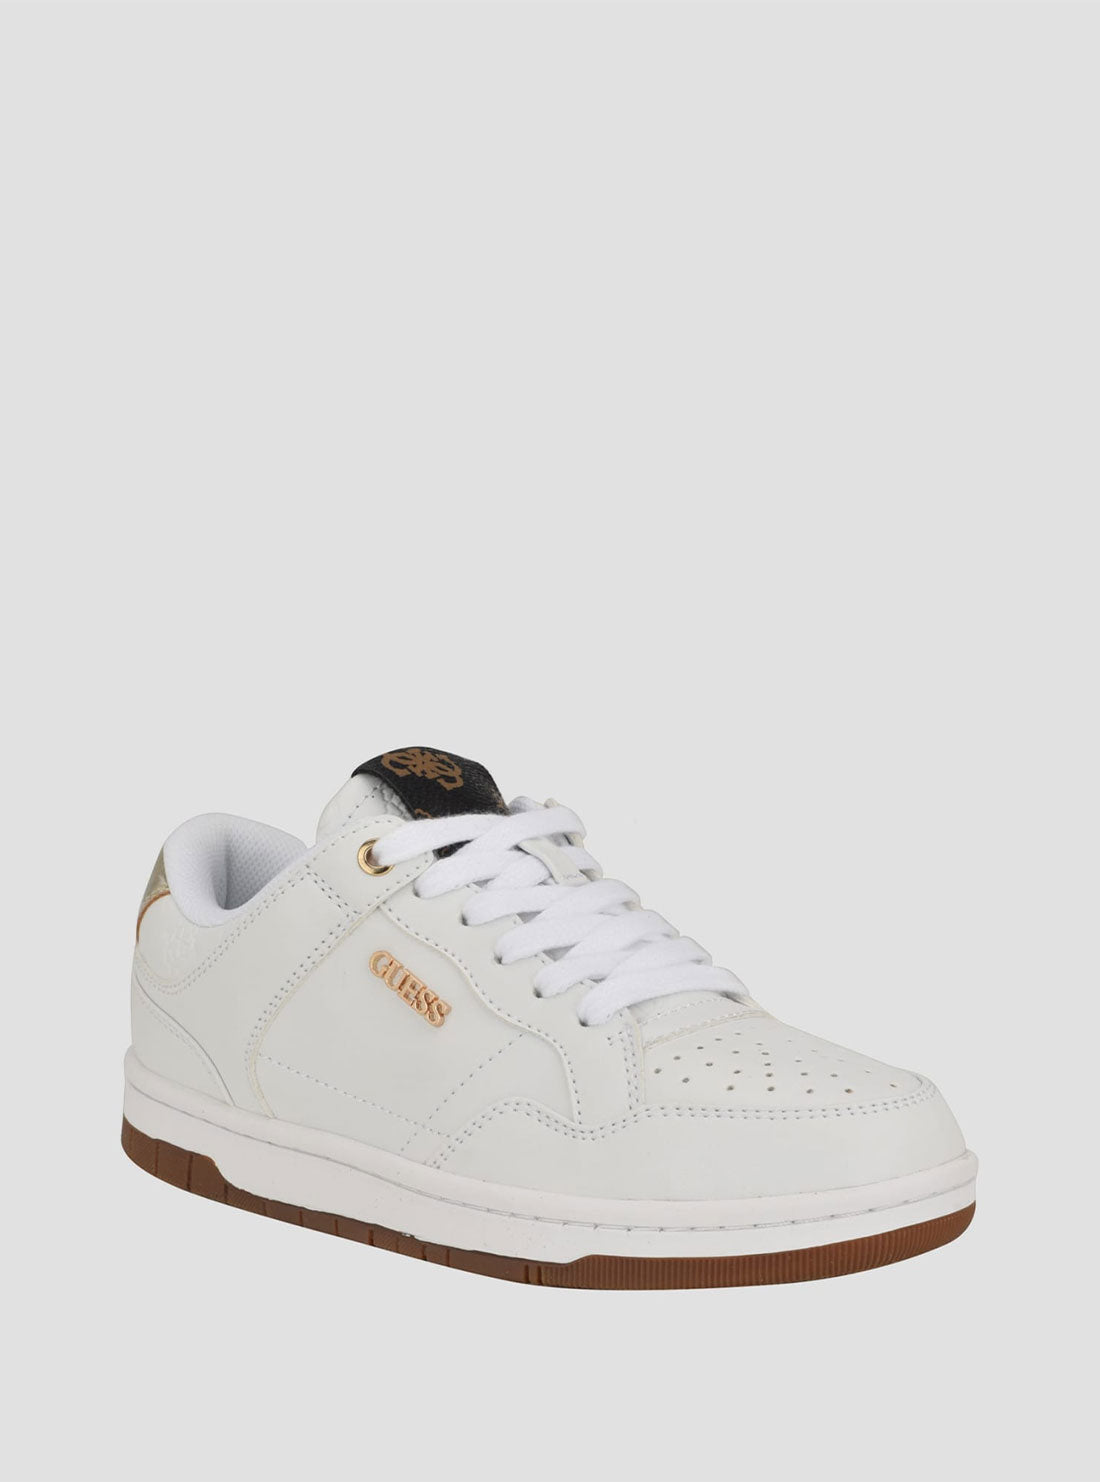 GUESS White Rubinn Low-Top Sneakers front view